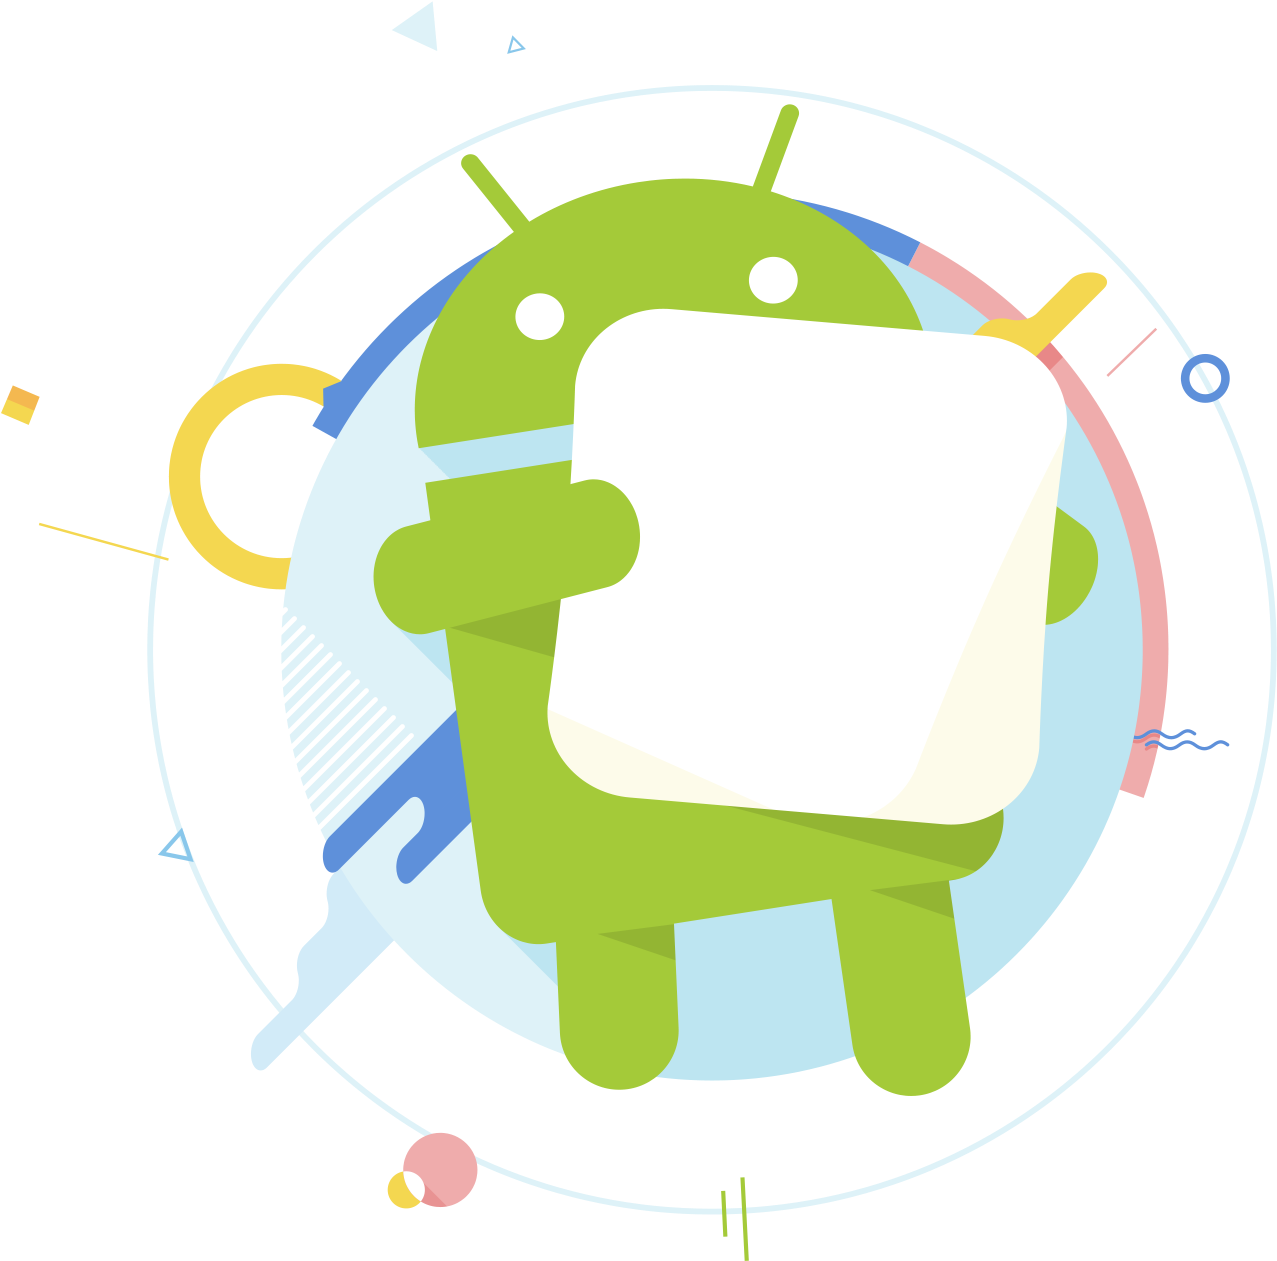 Android Marshmallow Mascot